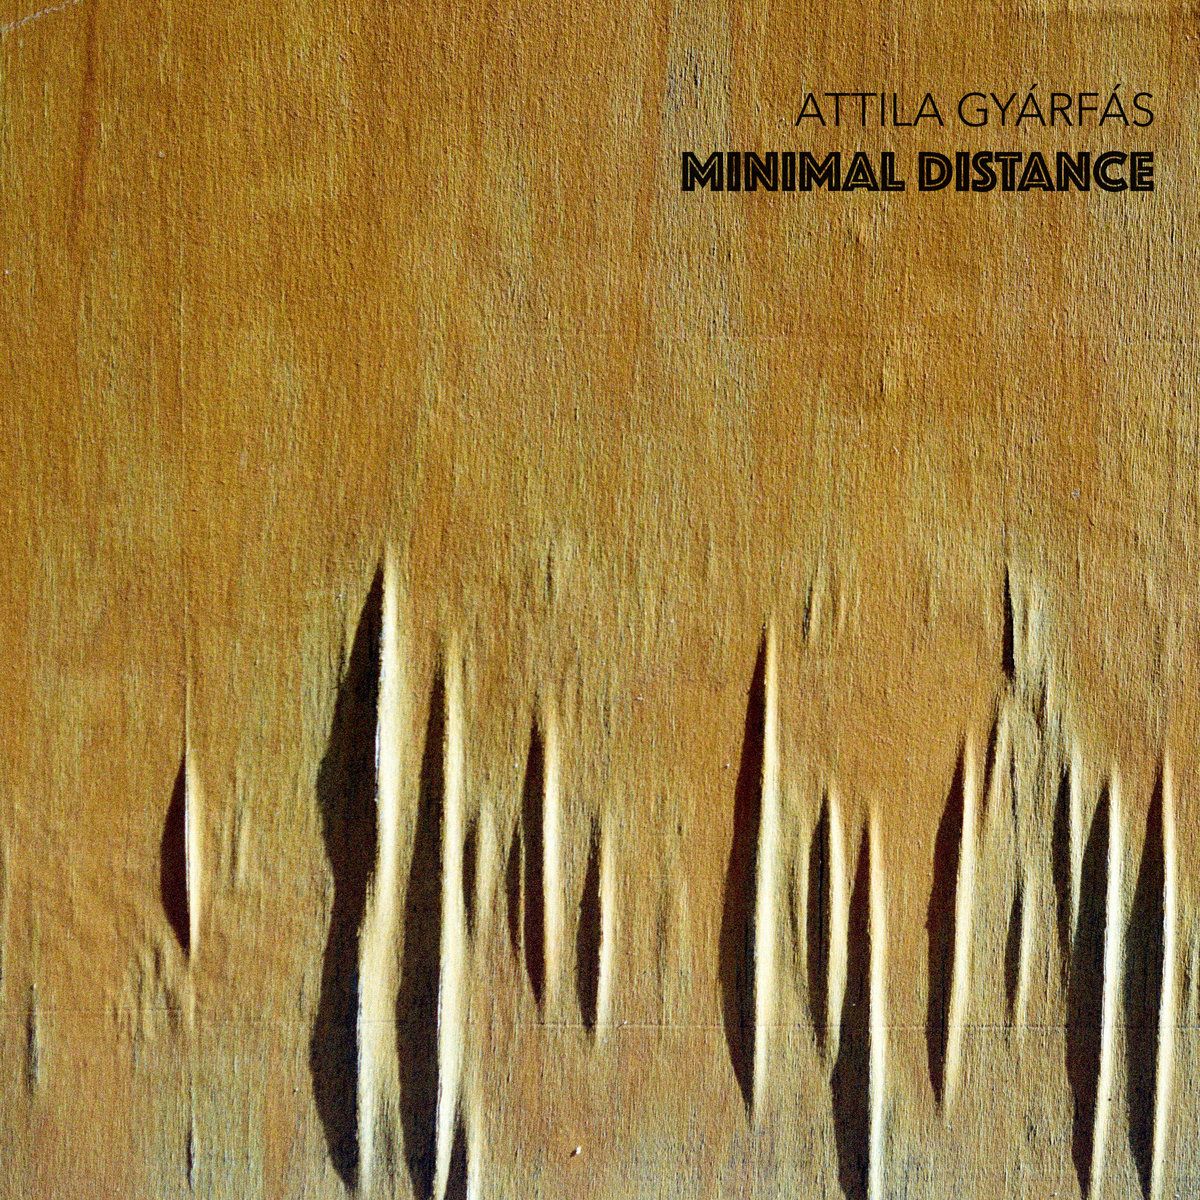 Gyárfás Attila - Minimal Distance - LP